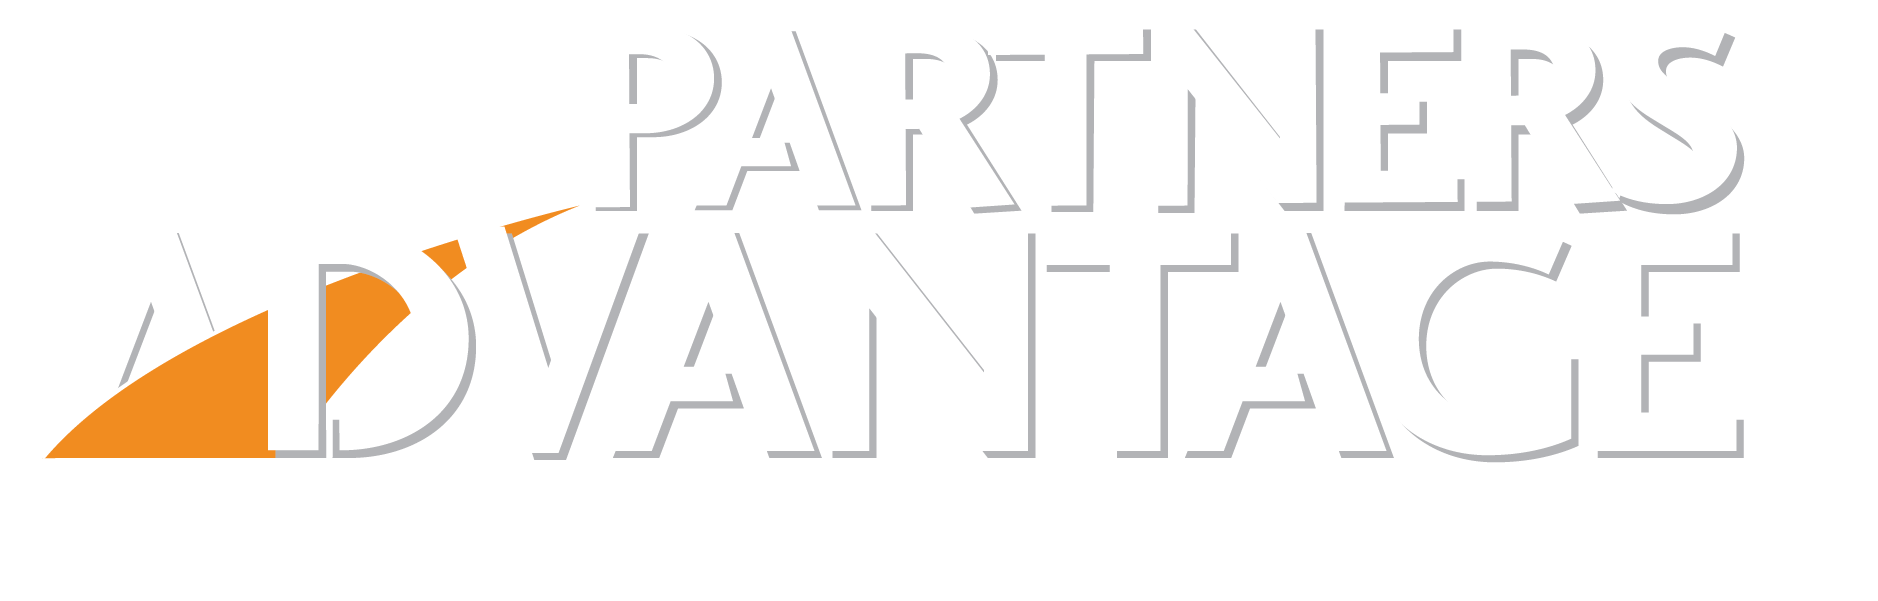 Partners Advantage - A Gallagher Company